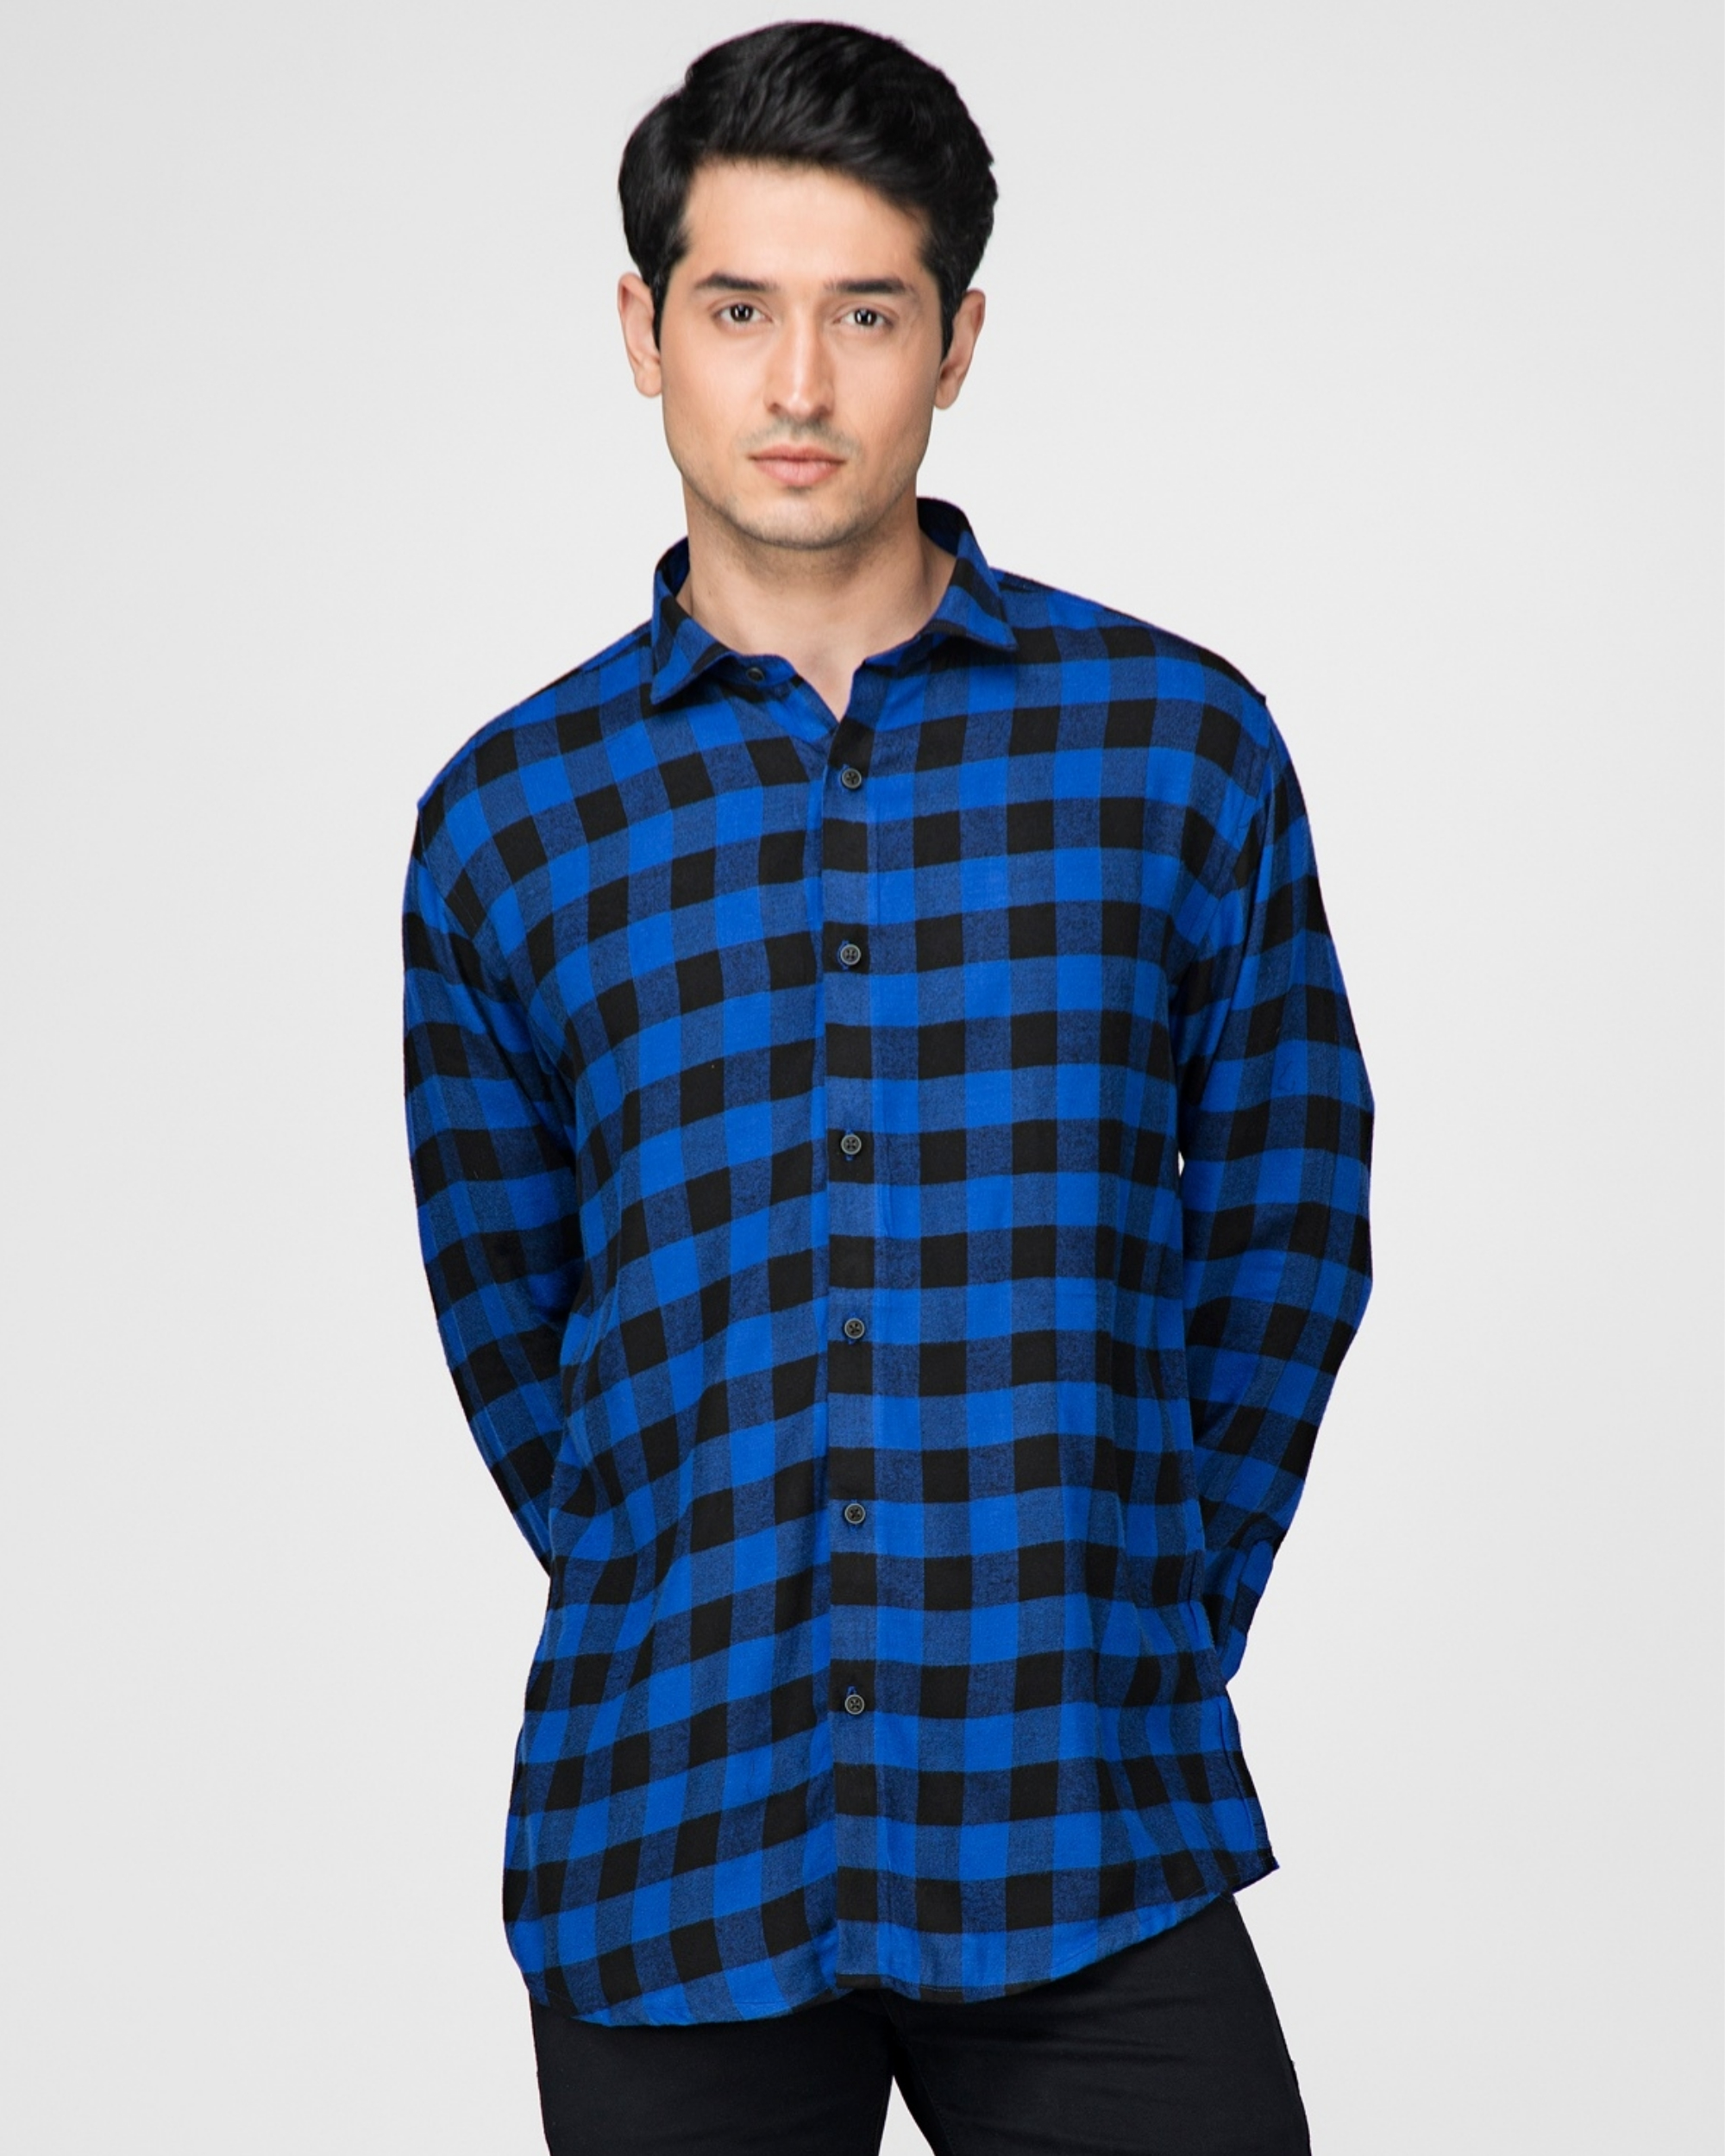 Blue and black gingham checkered shirt